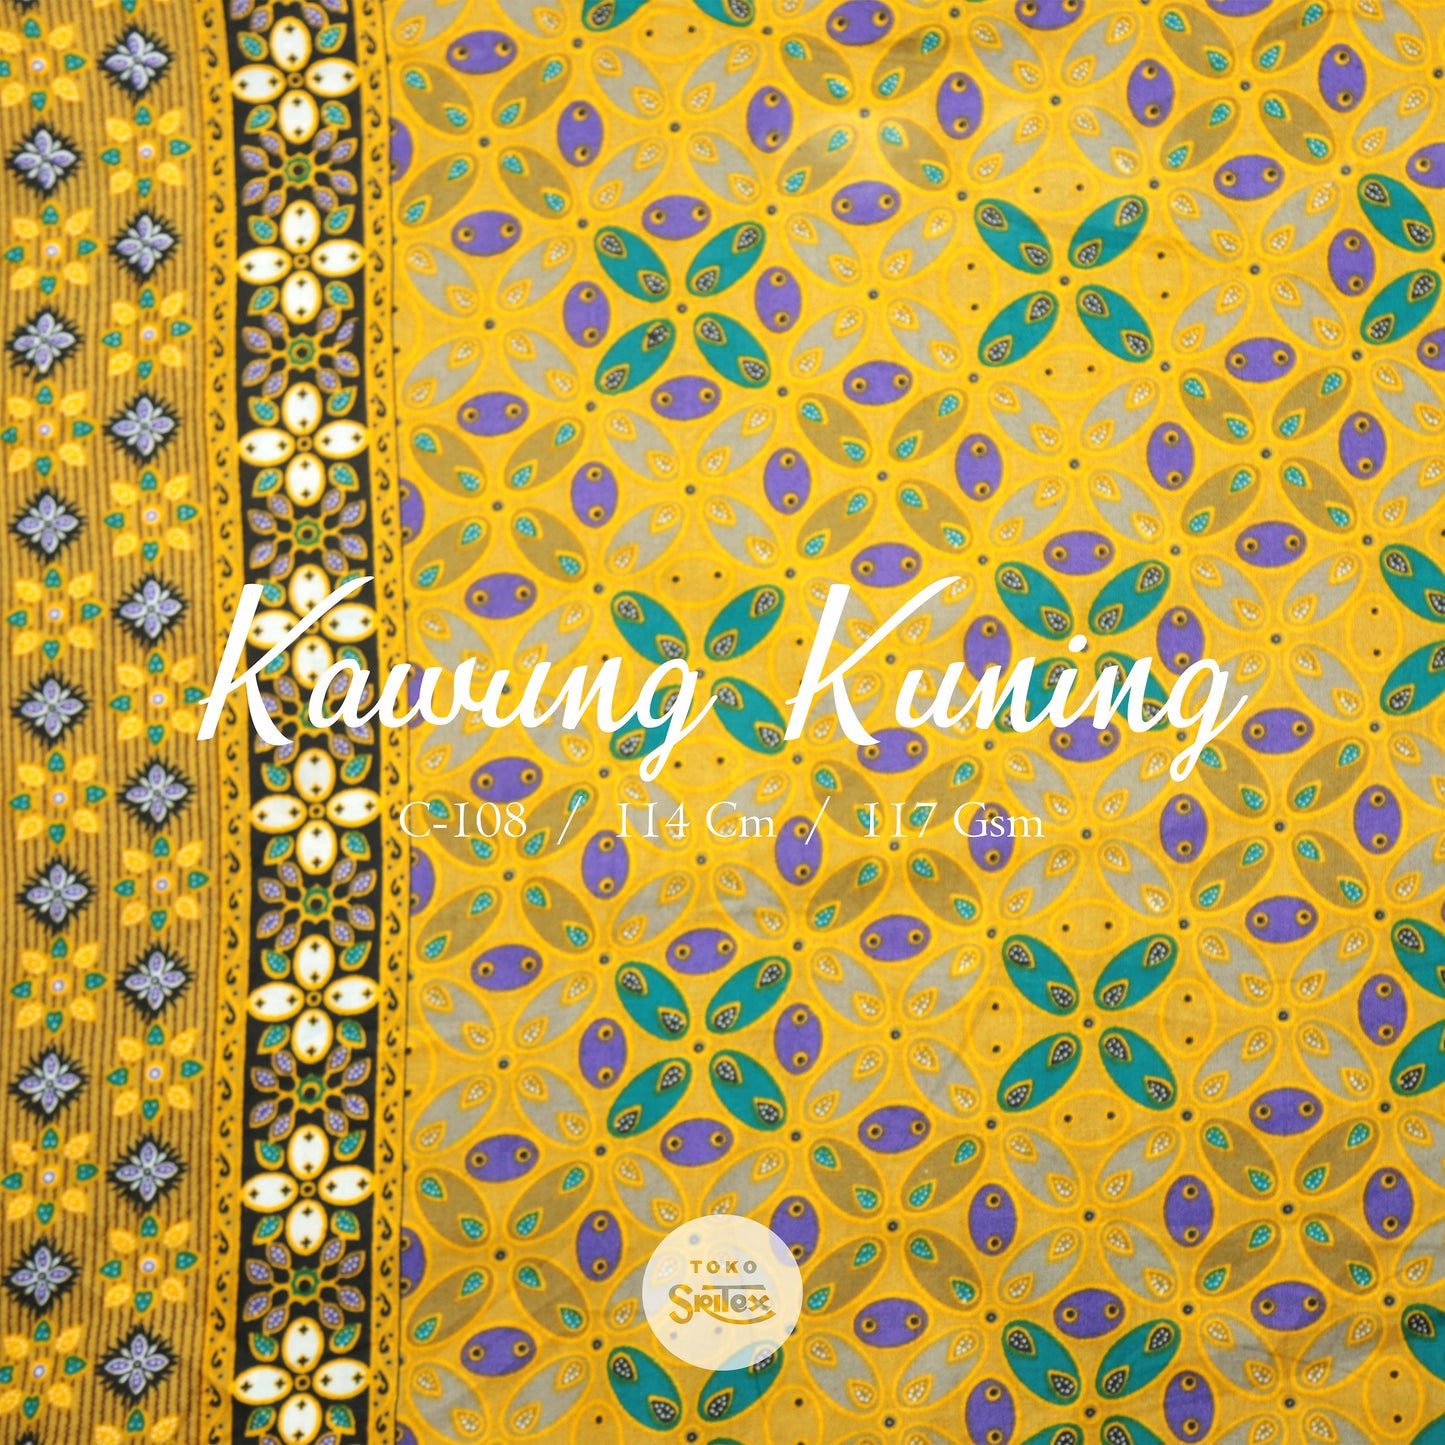 Toko Sritex Kain Katun Print Kawung Kuning Premium Ekspor C108. Harga per 45cm, Lebar 114cm.